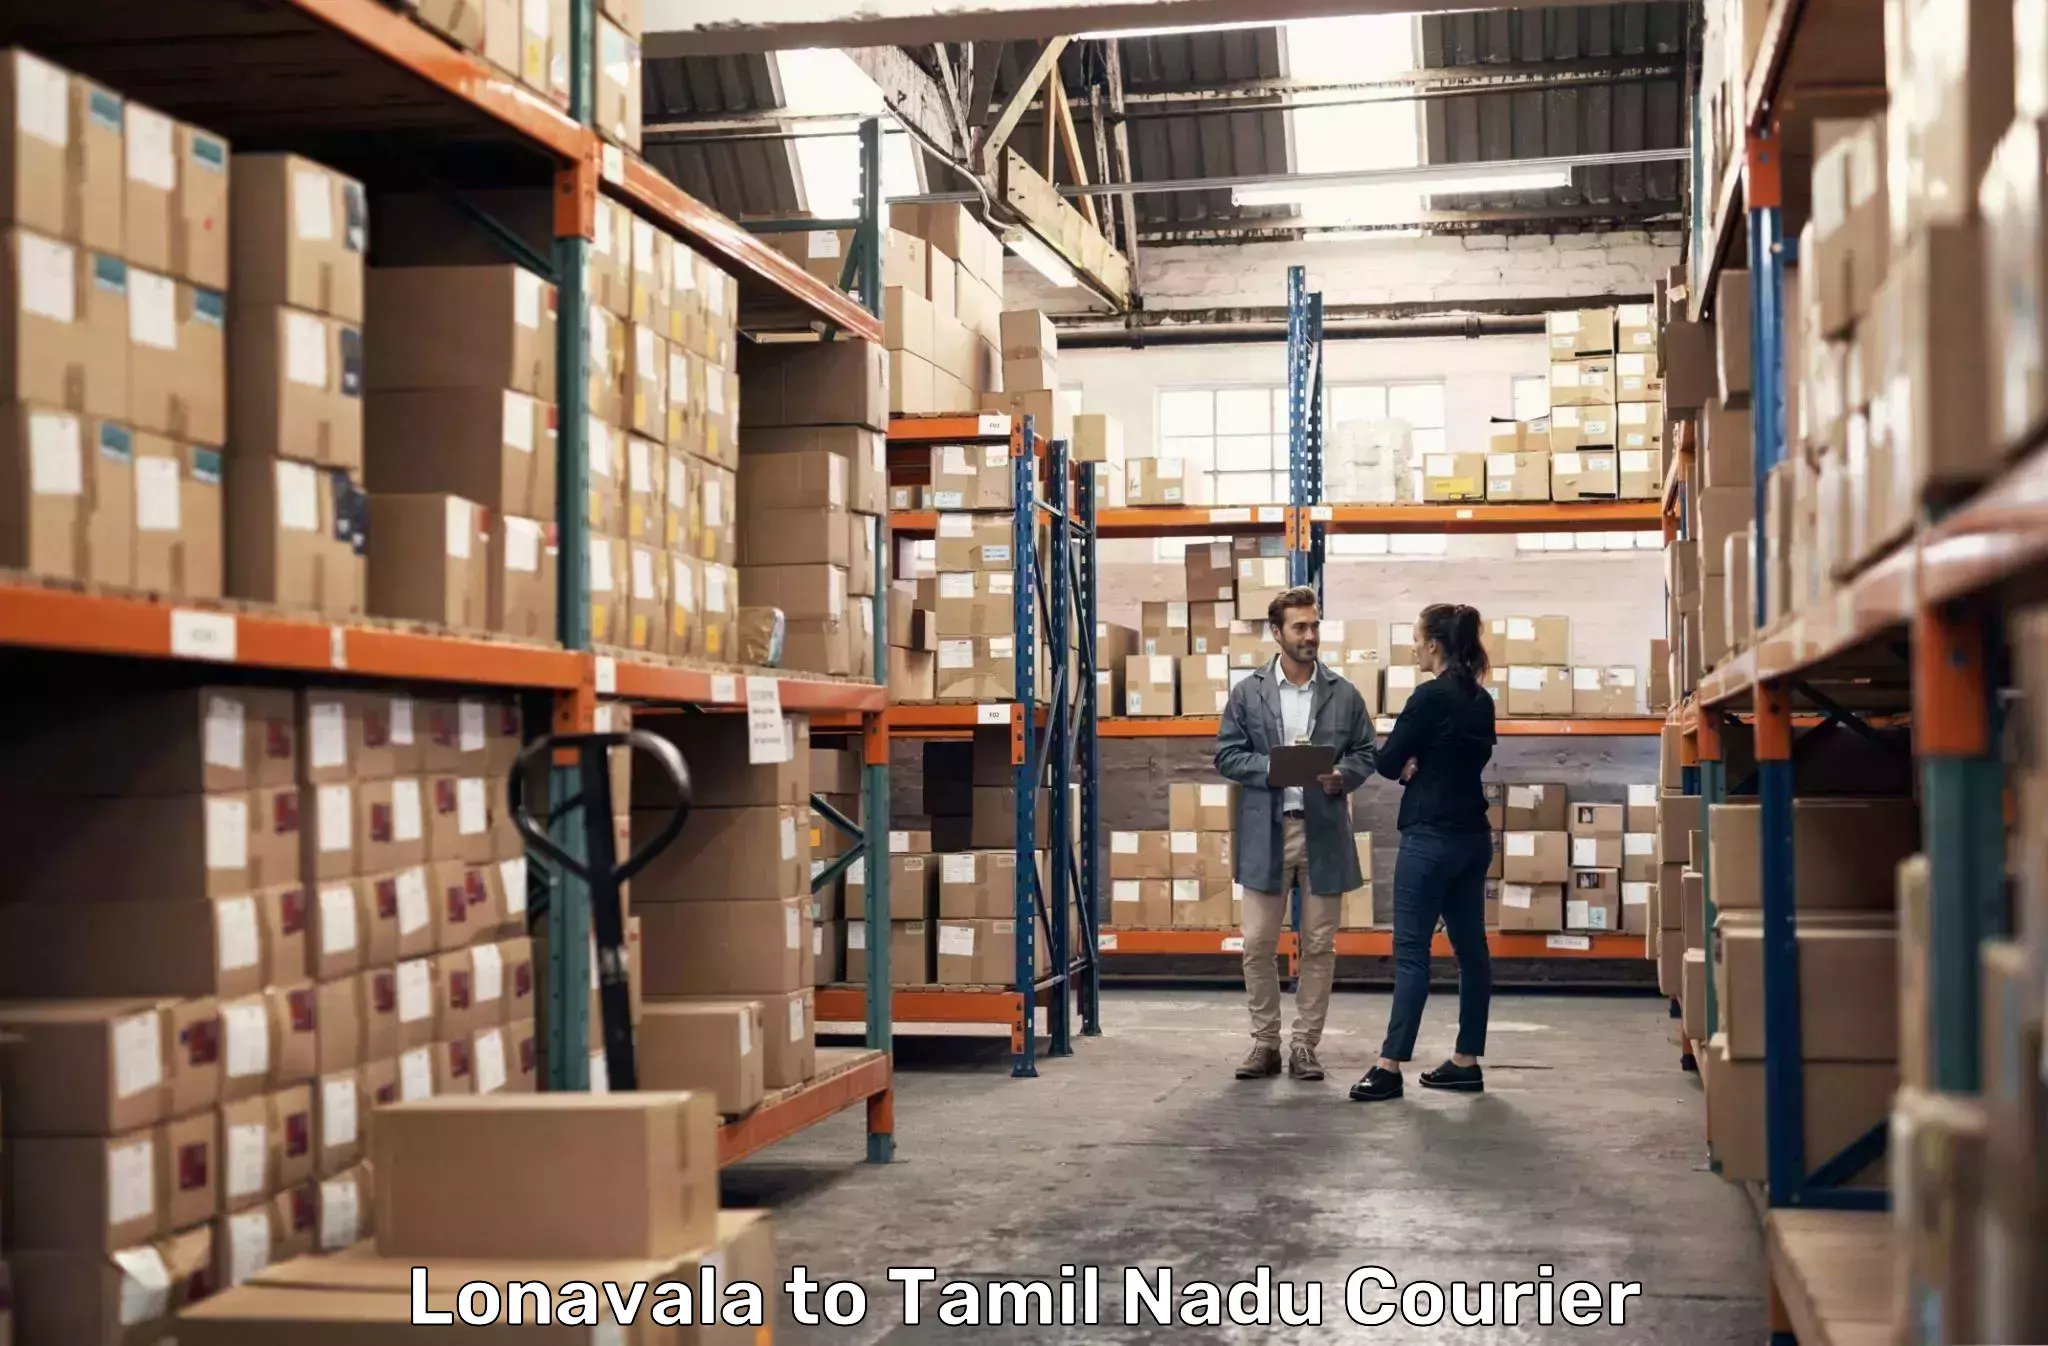 Courier service booking in Lonavala to Tirukalukundram